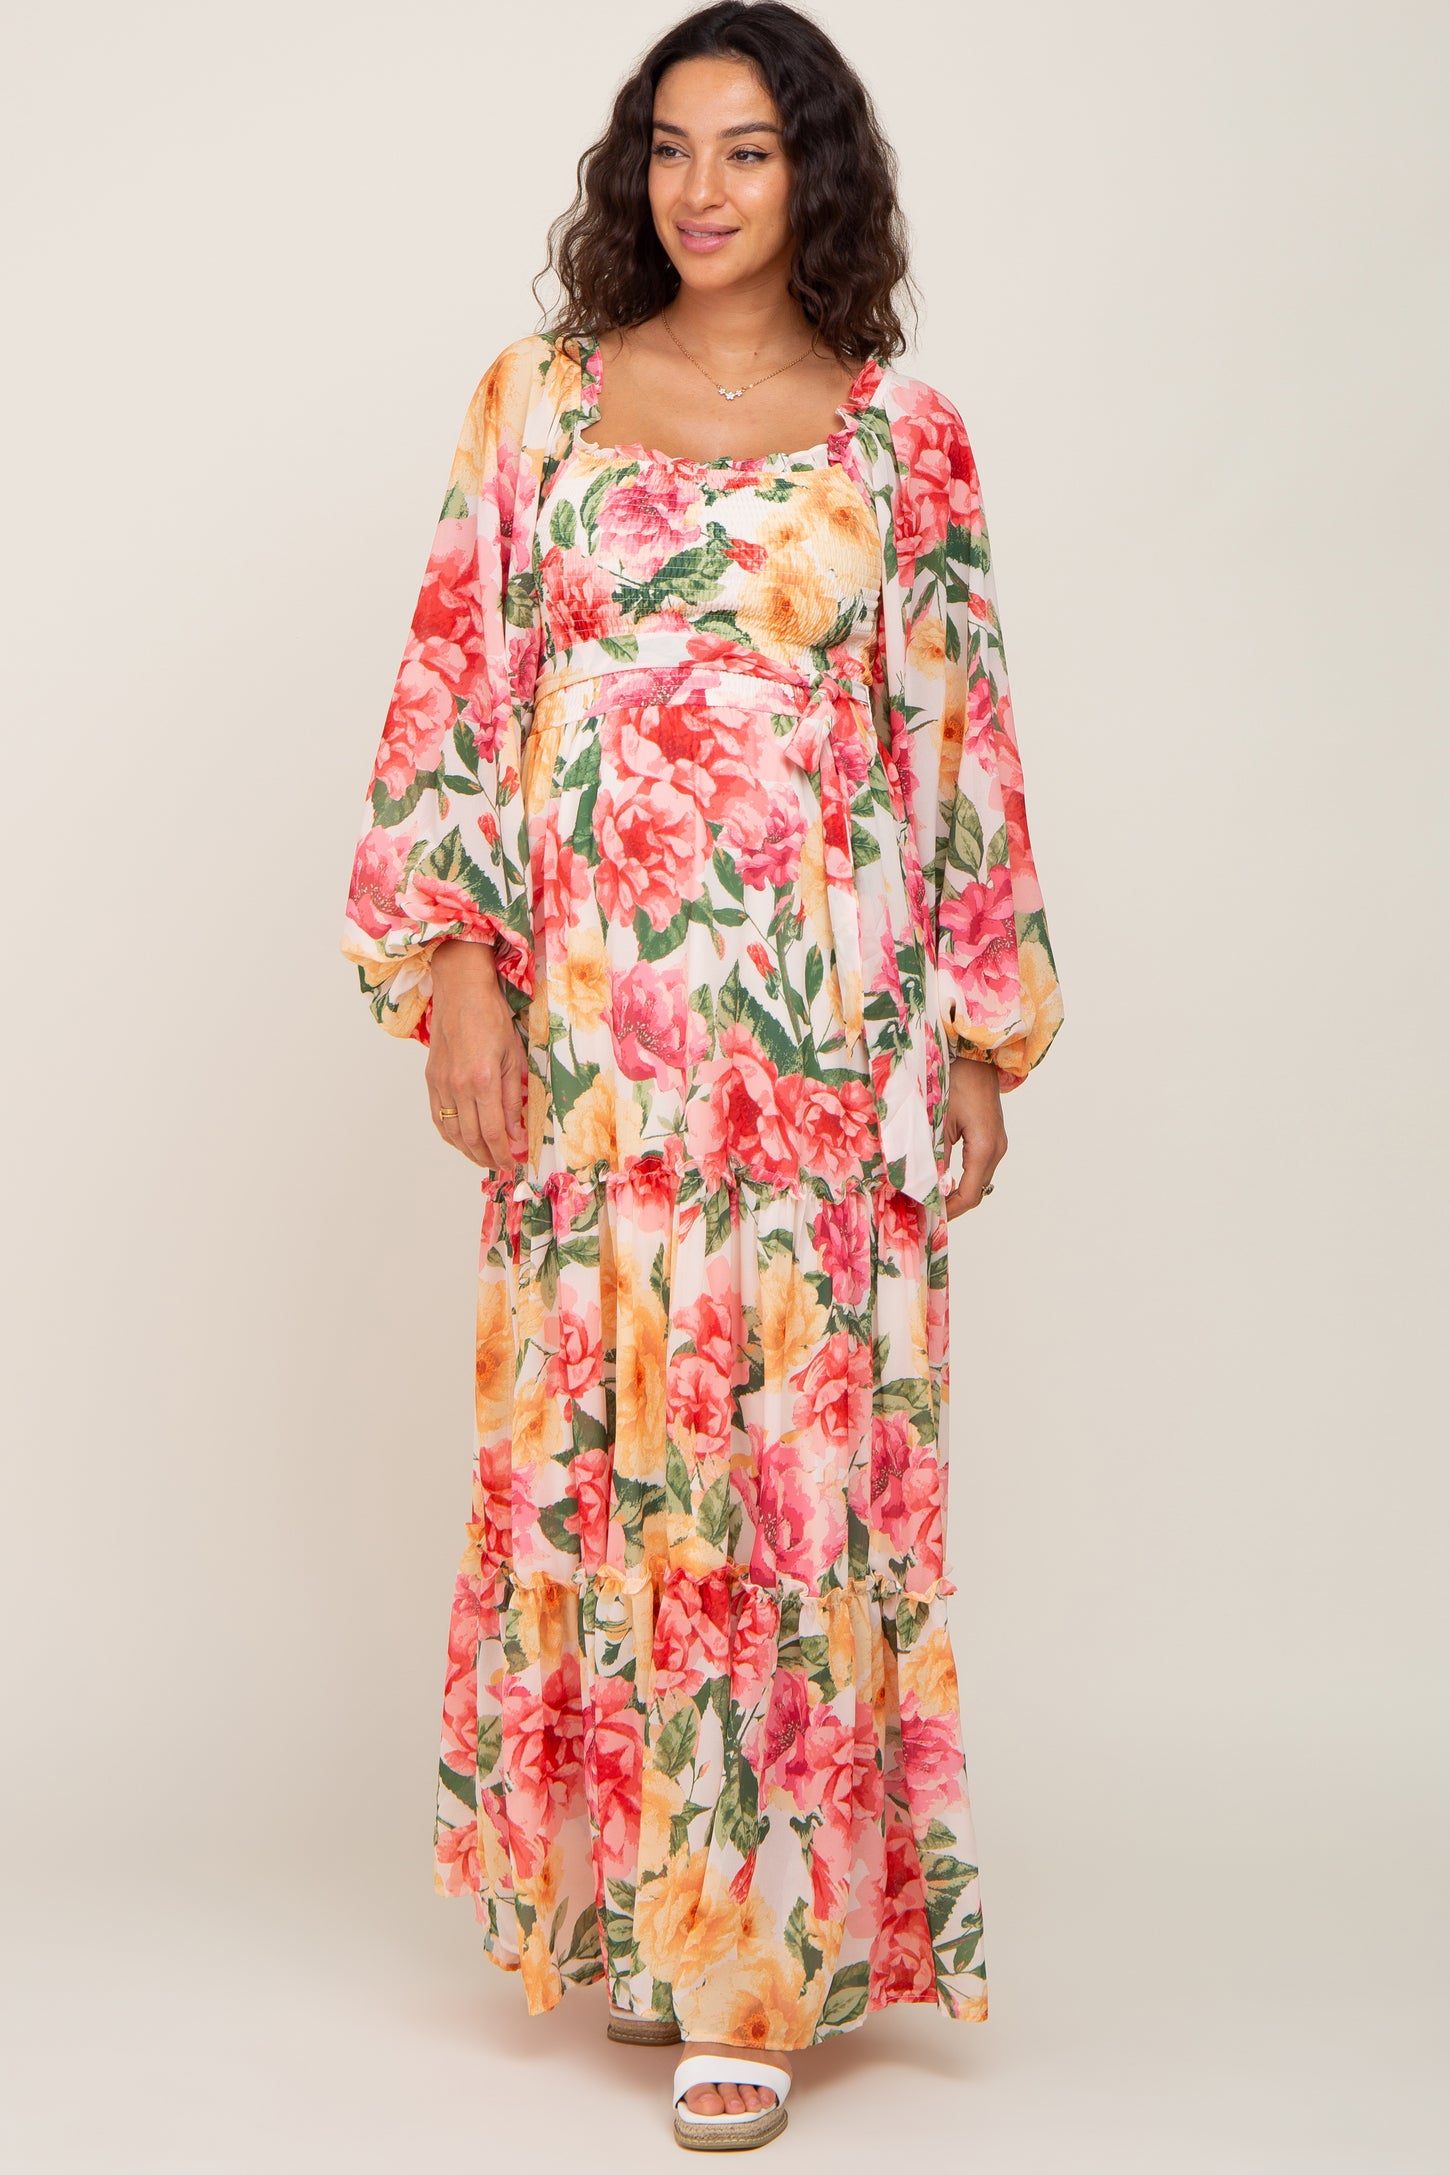 Ivory Floral Chiffon Smocked Off Shoulder Maternity Maxi Dress